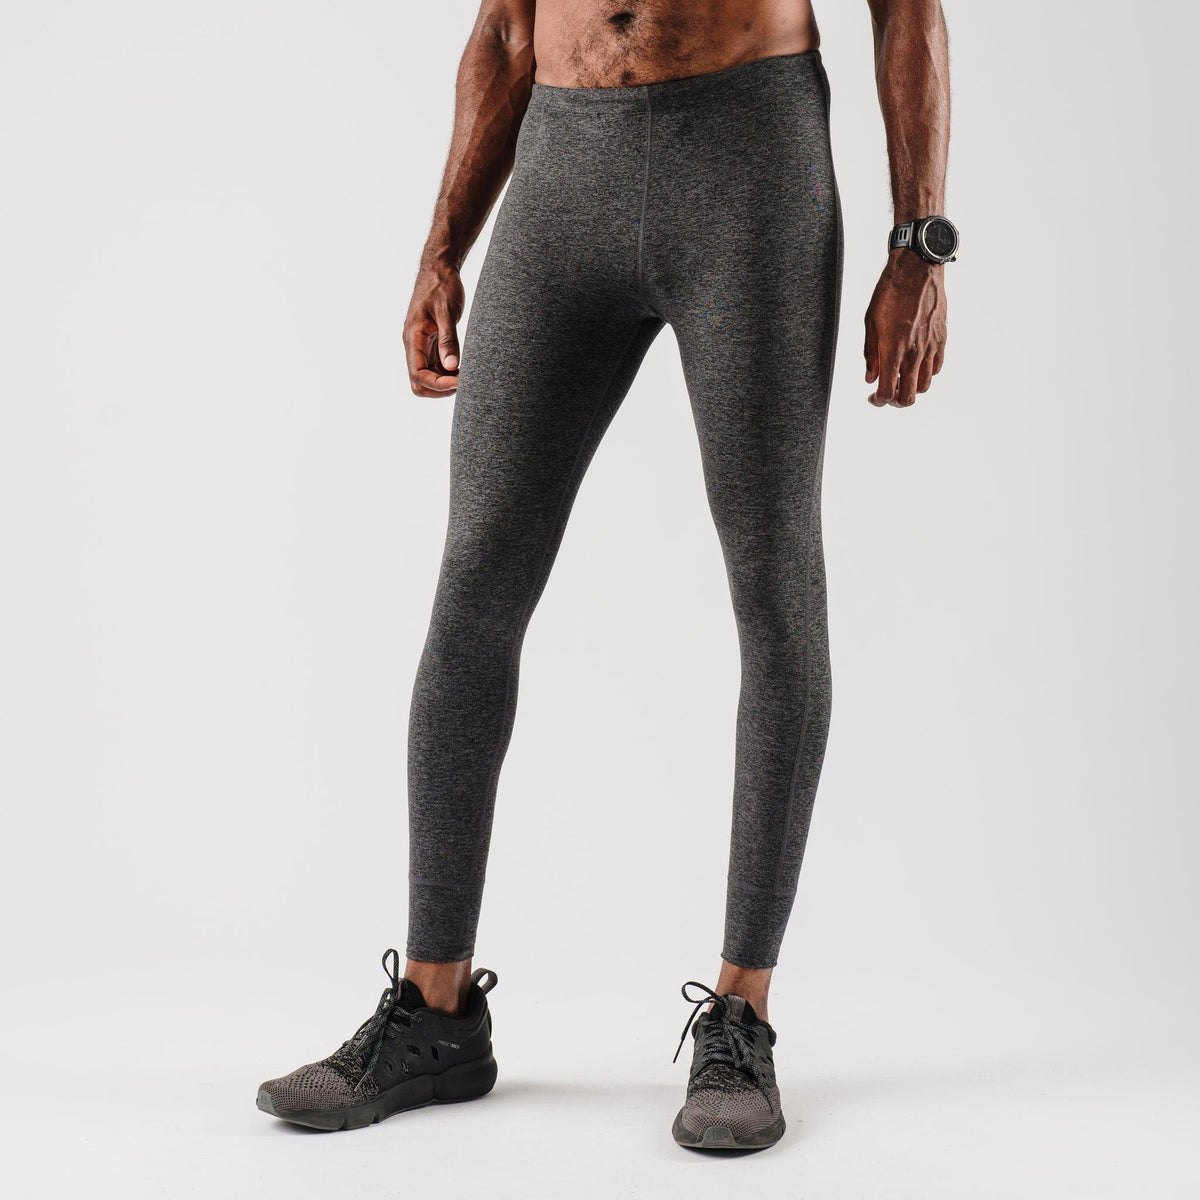 WINTER RUNNING TIGHTS BE ONE Running leggings - Men - Diadora Online Store  DK